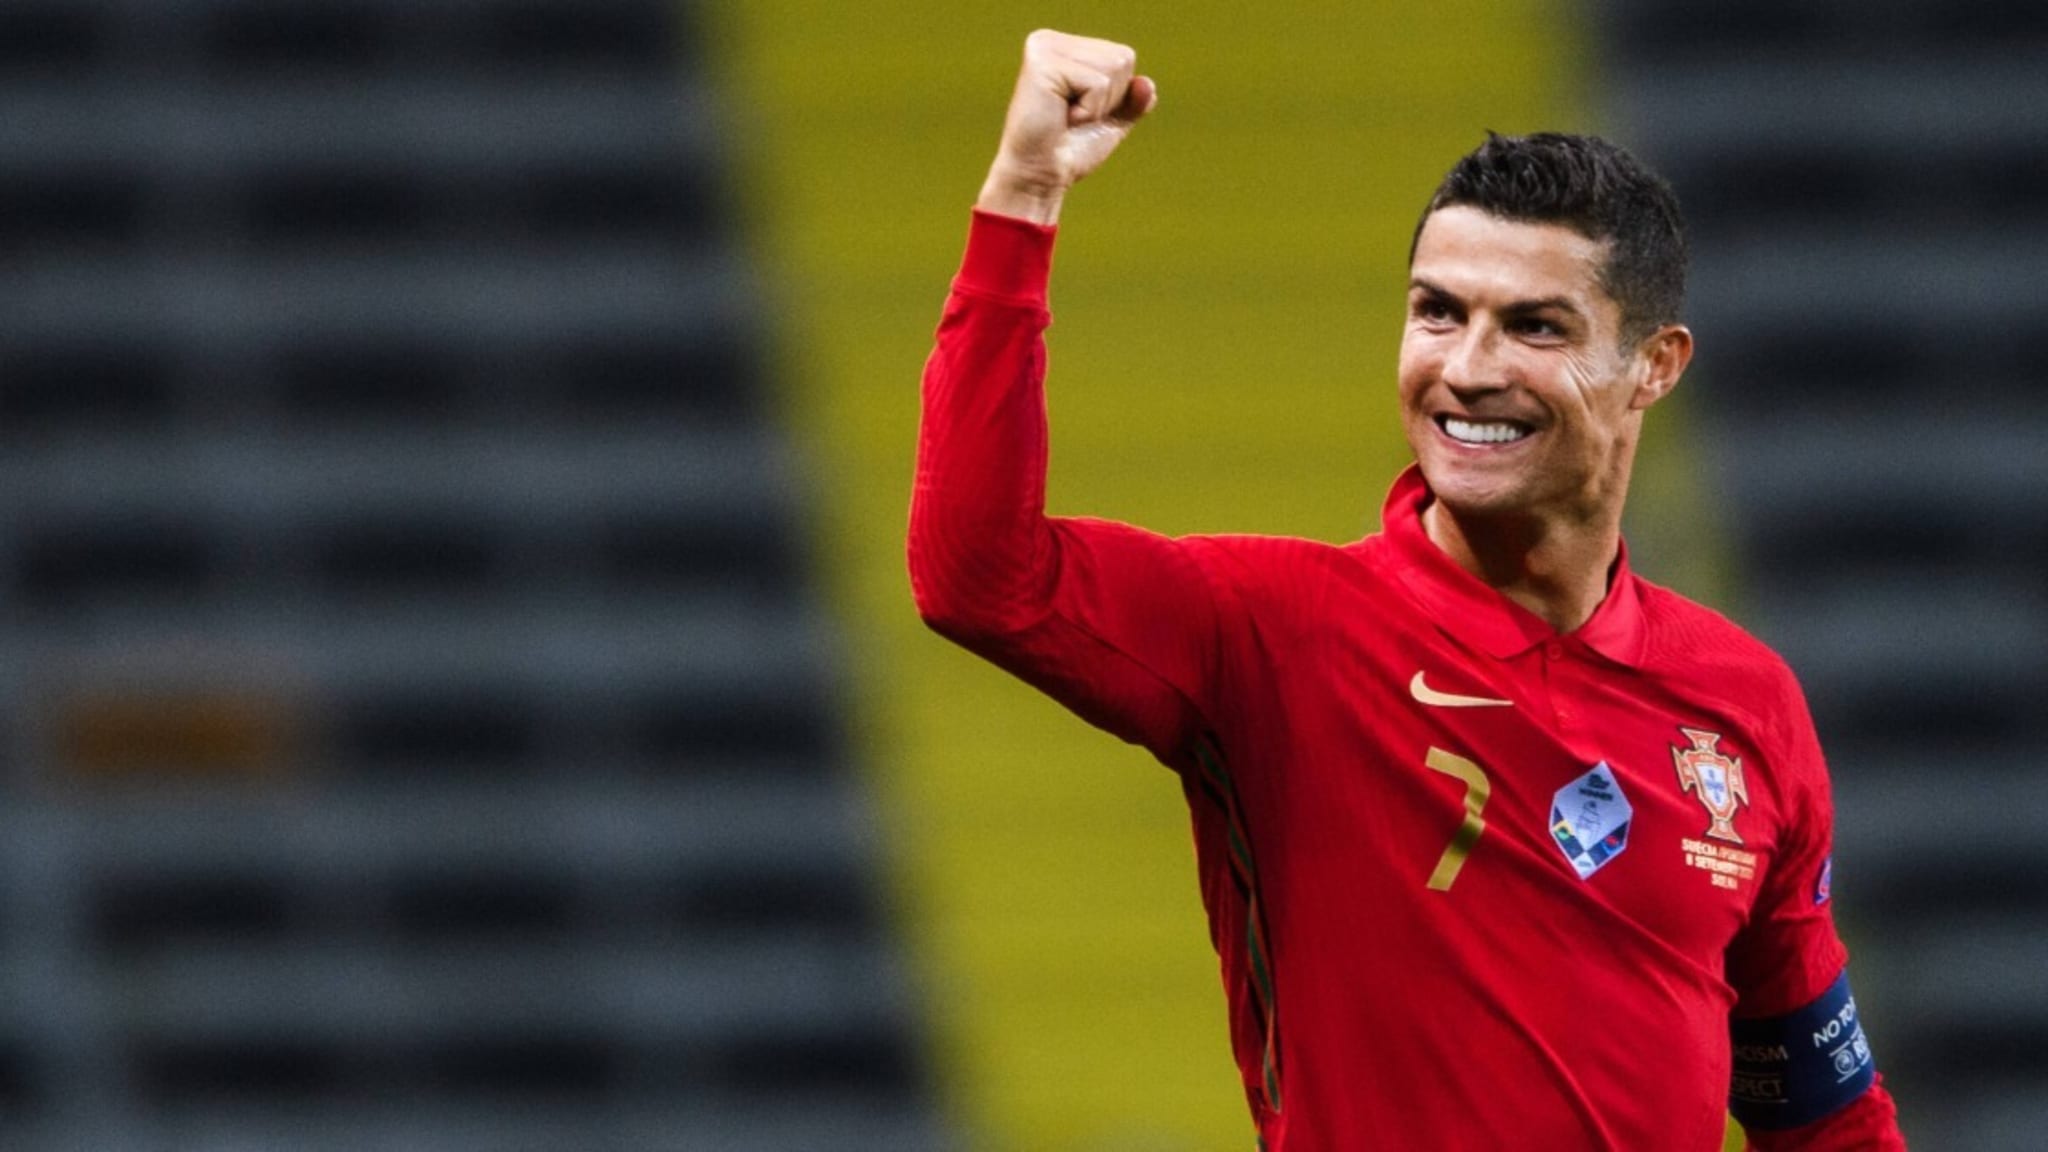 The Best FIFA Football Awards™ Ronaldo: An evergreen icon